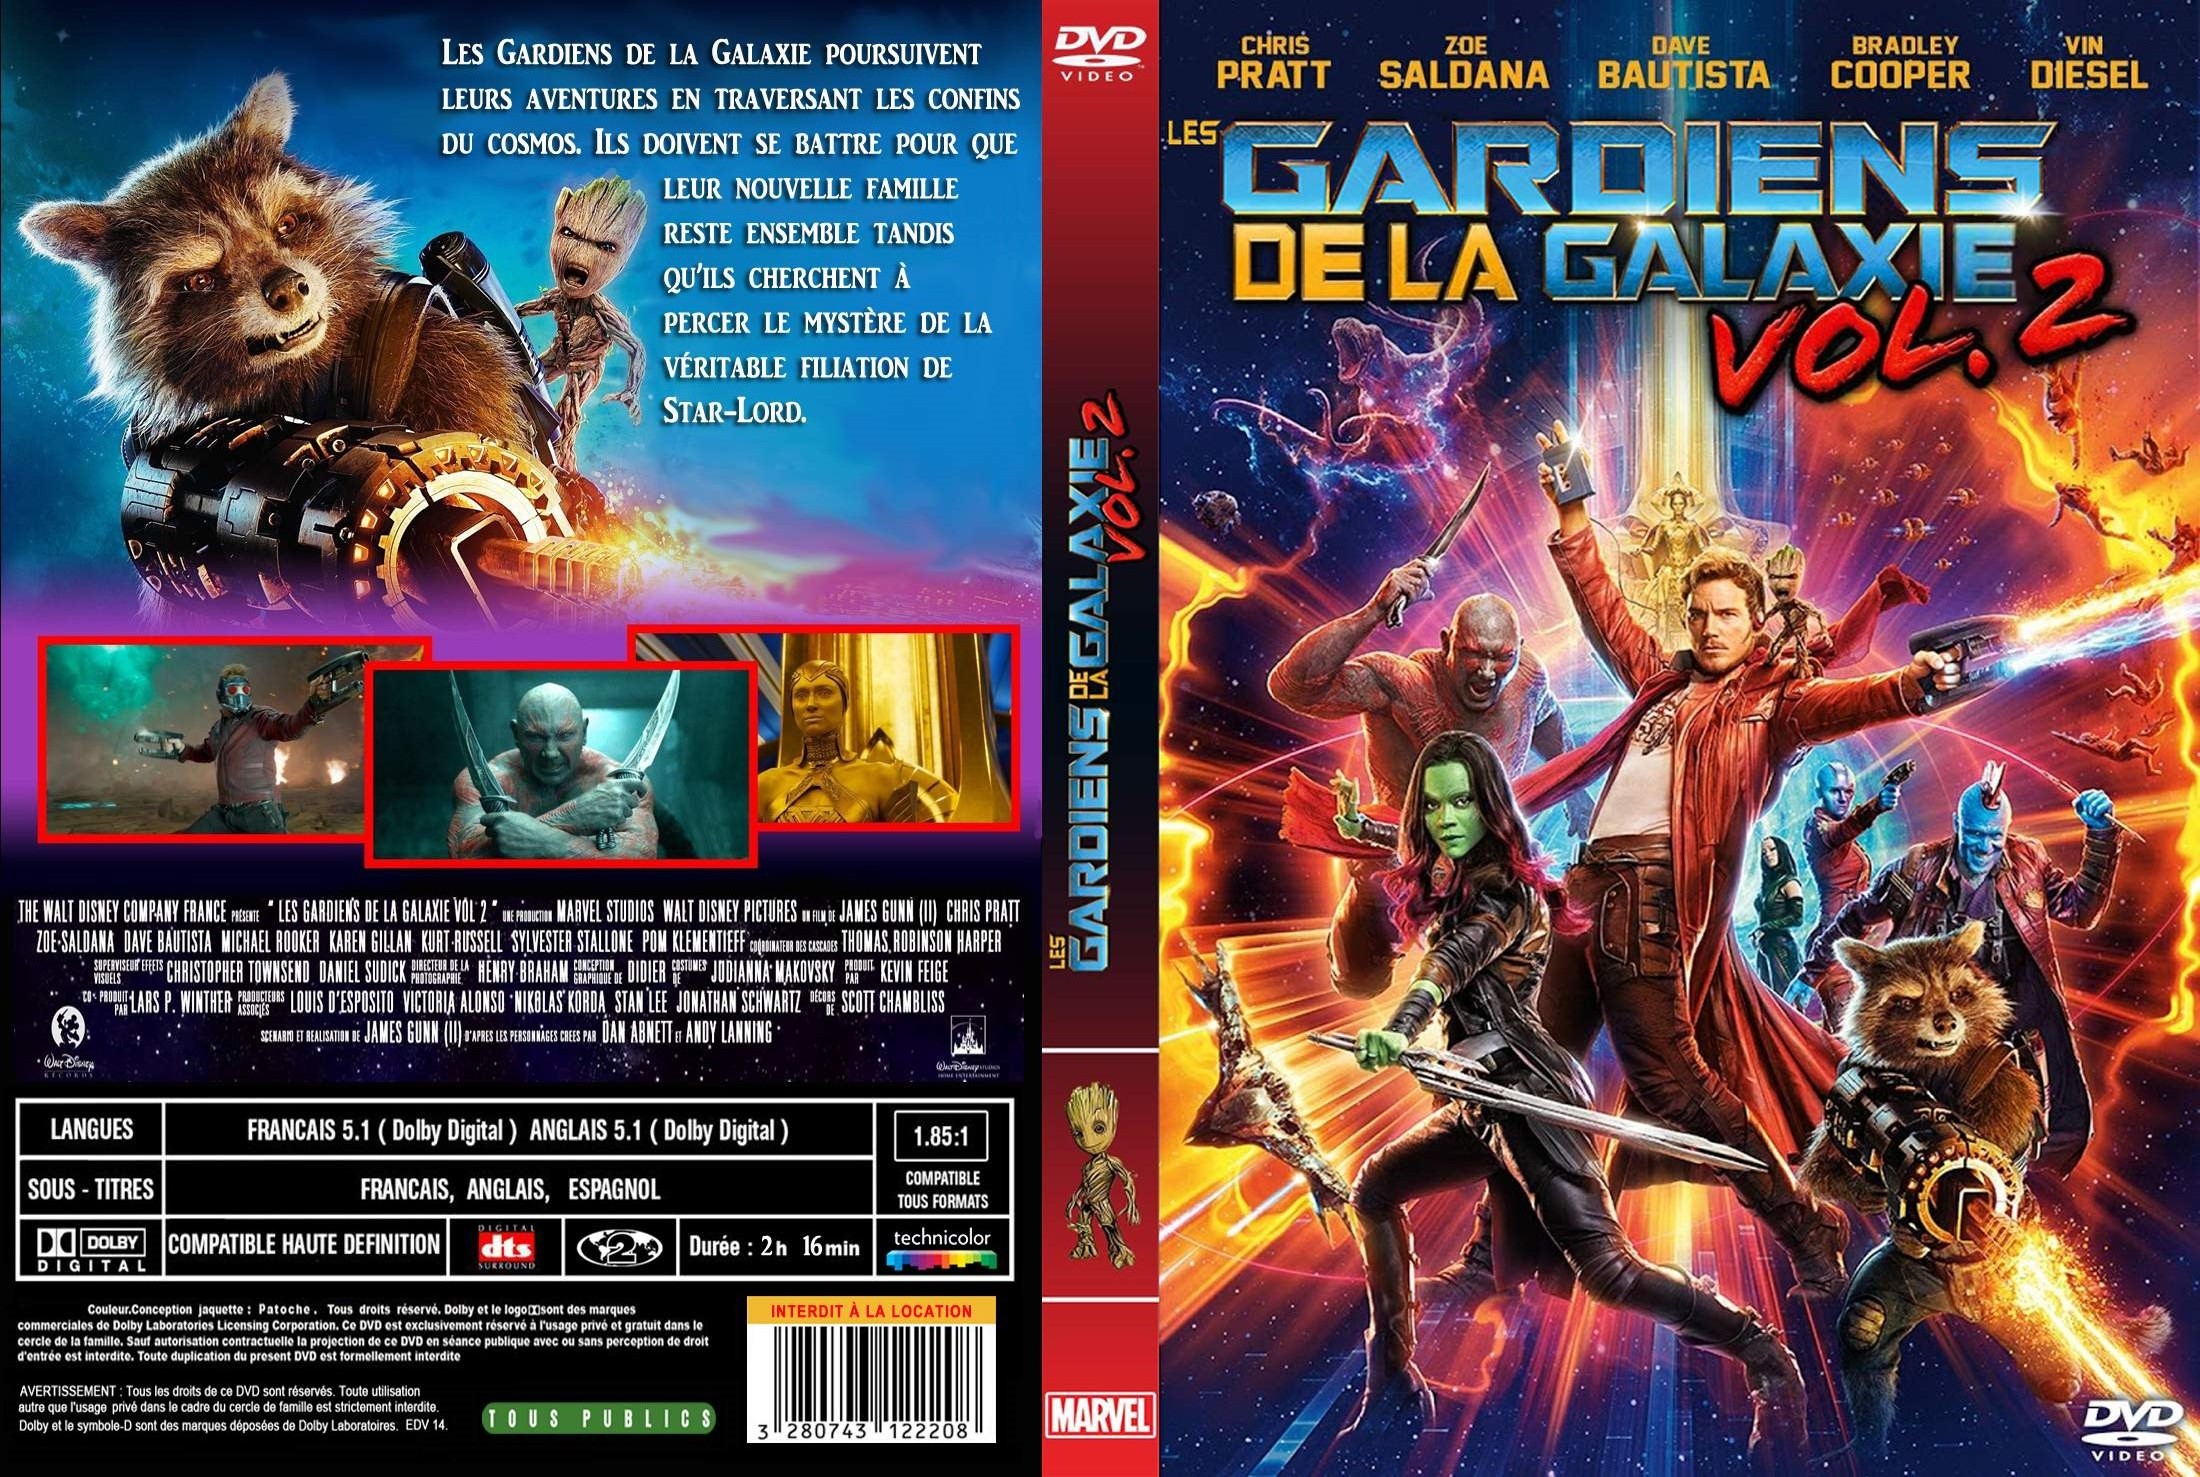 Jaquette DVD Les gardiens de la galaxie 2 custom